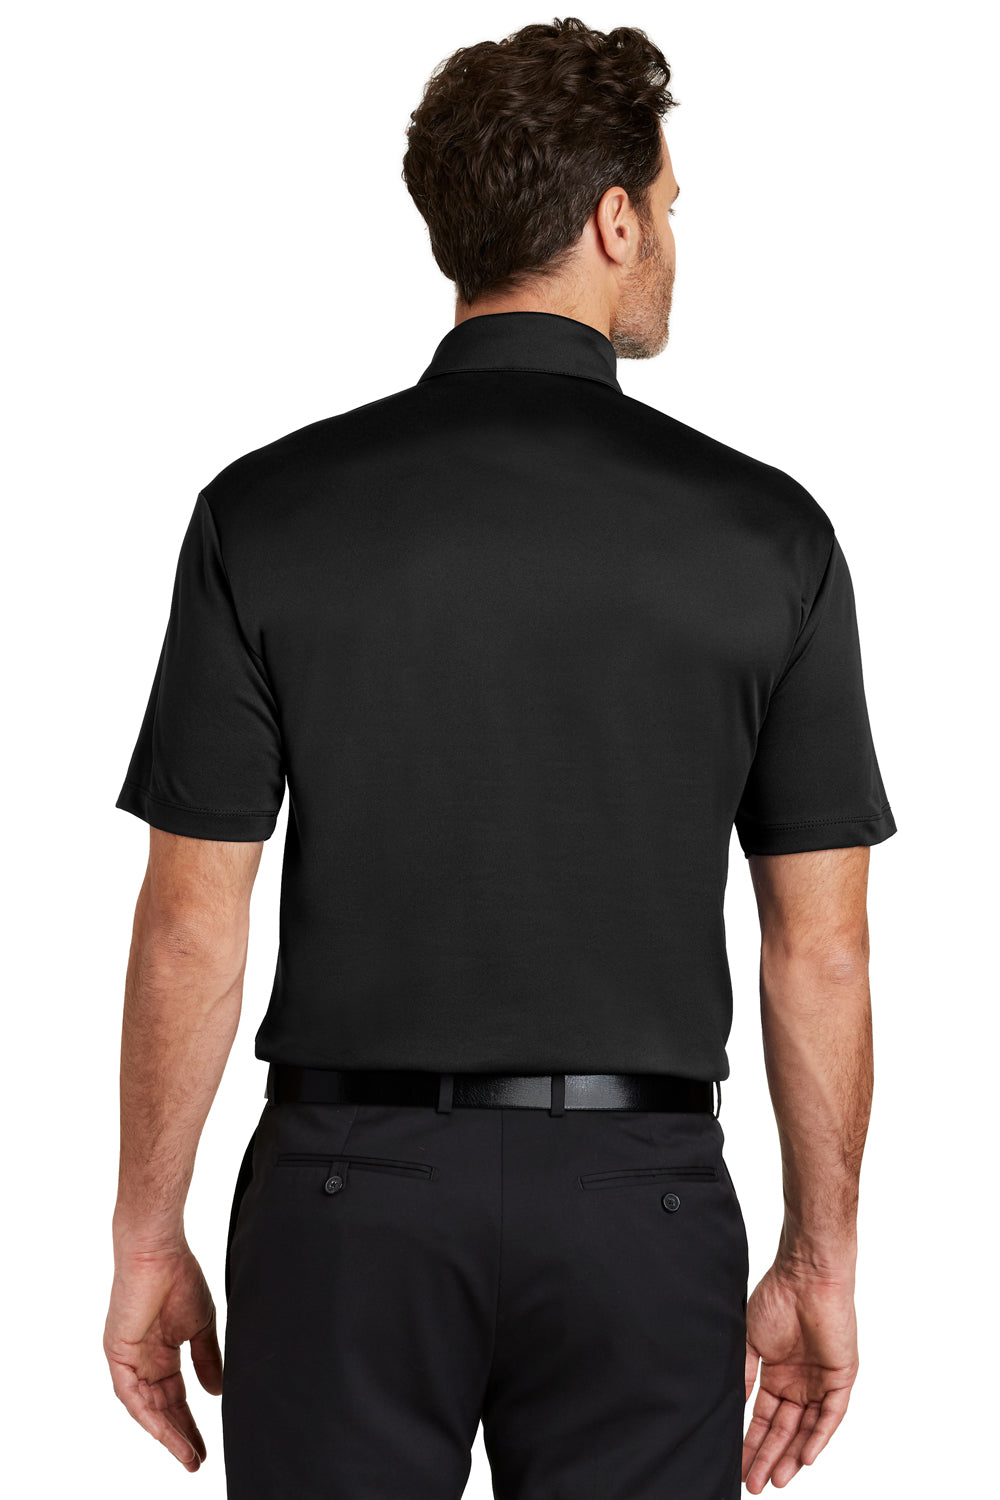 Port Authority K540 Mens Silk Touch Performance Moisture Wicking Short Sleeve Polo Shirt Black Back